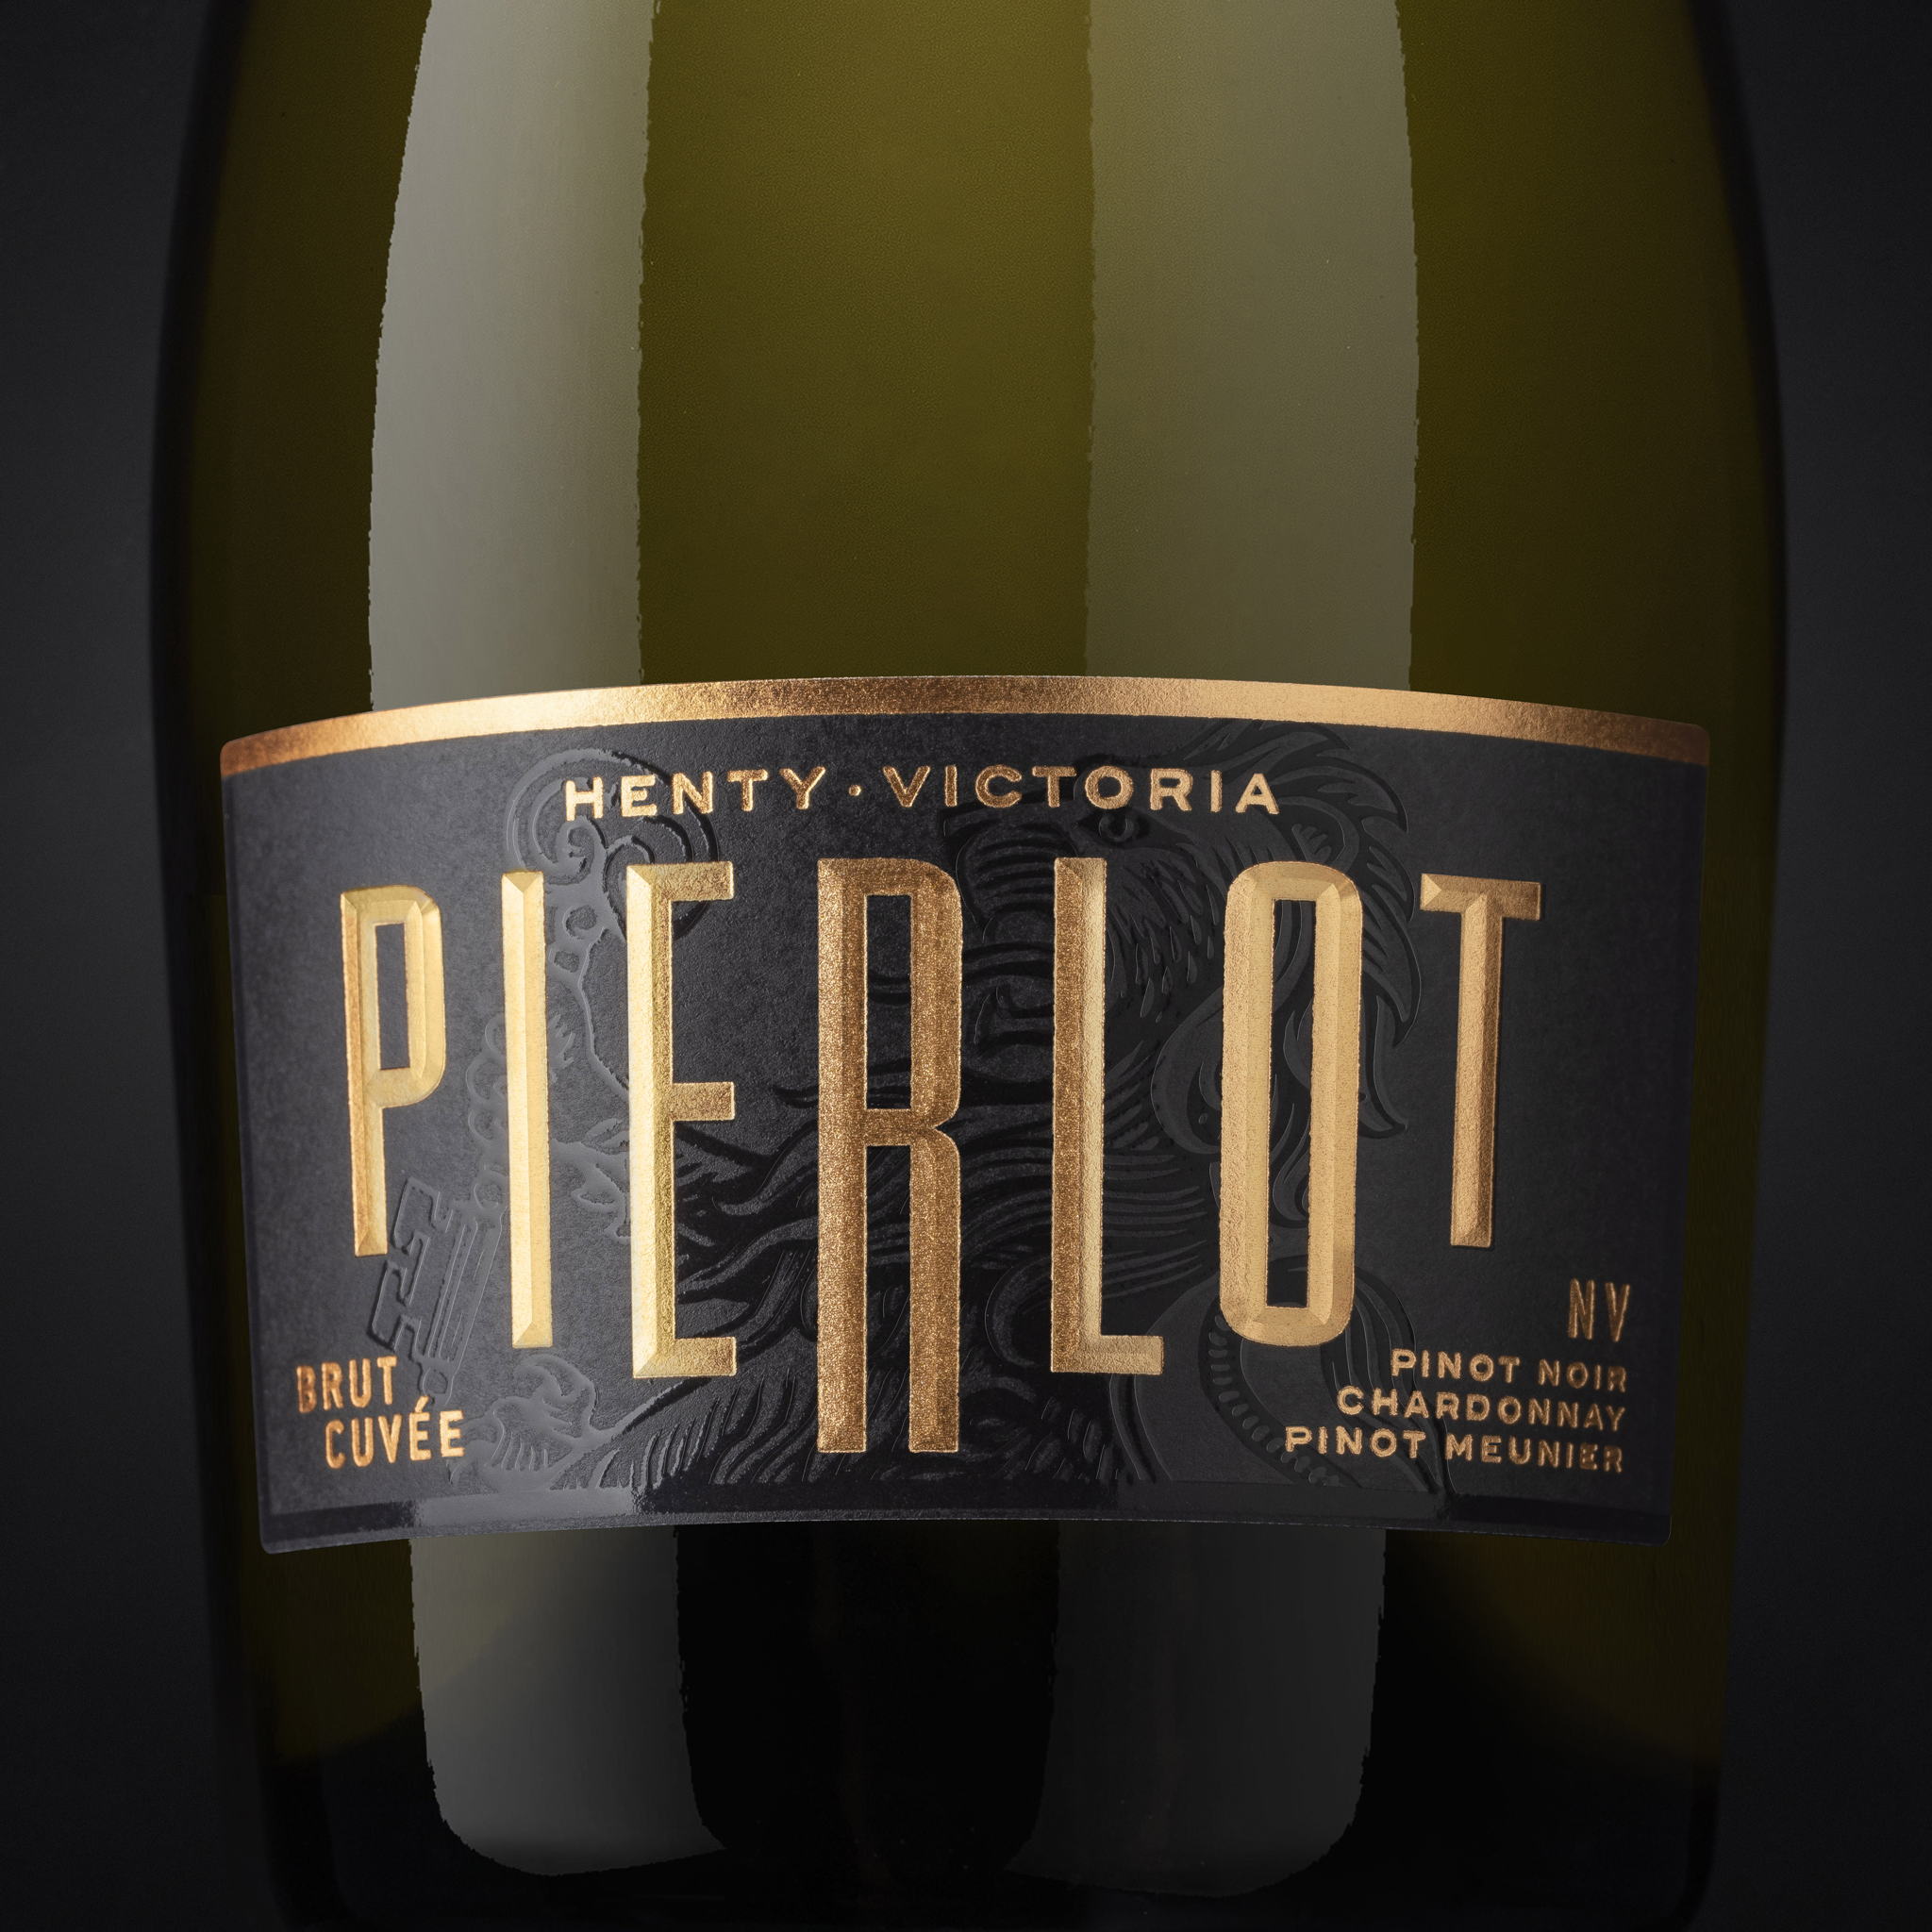 Pierlot Chardonnay Closeup Beauty.jpg